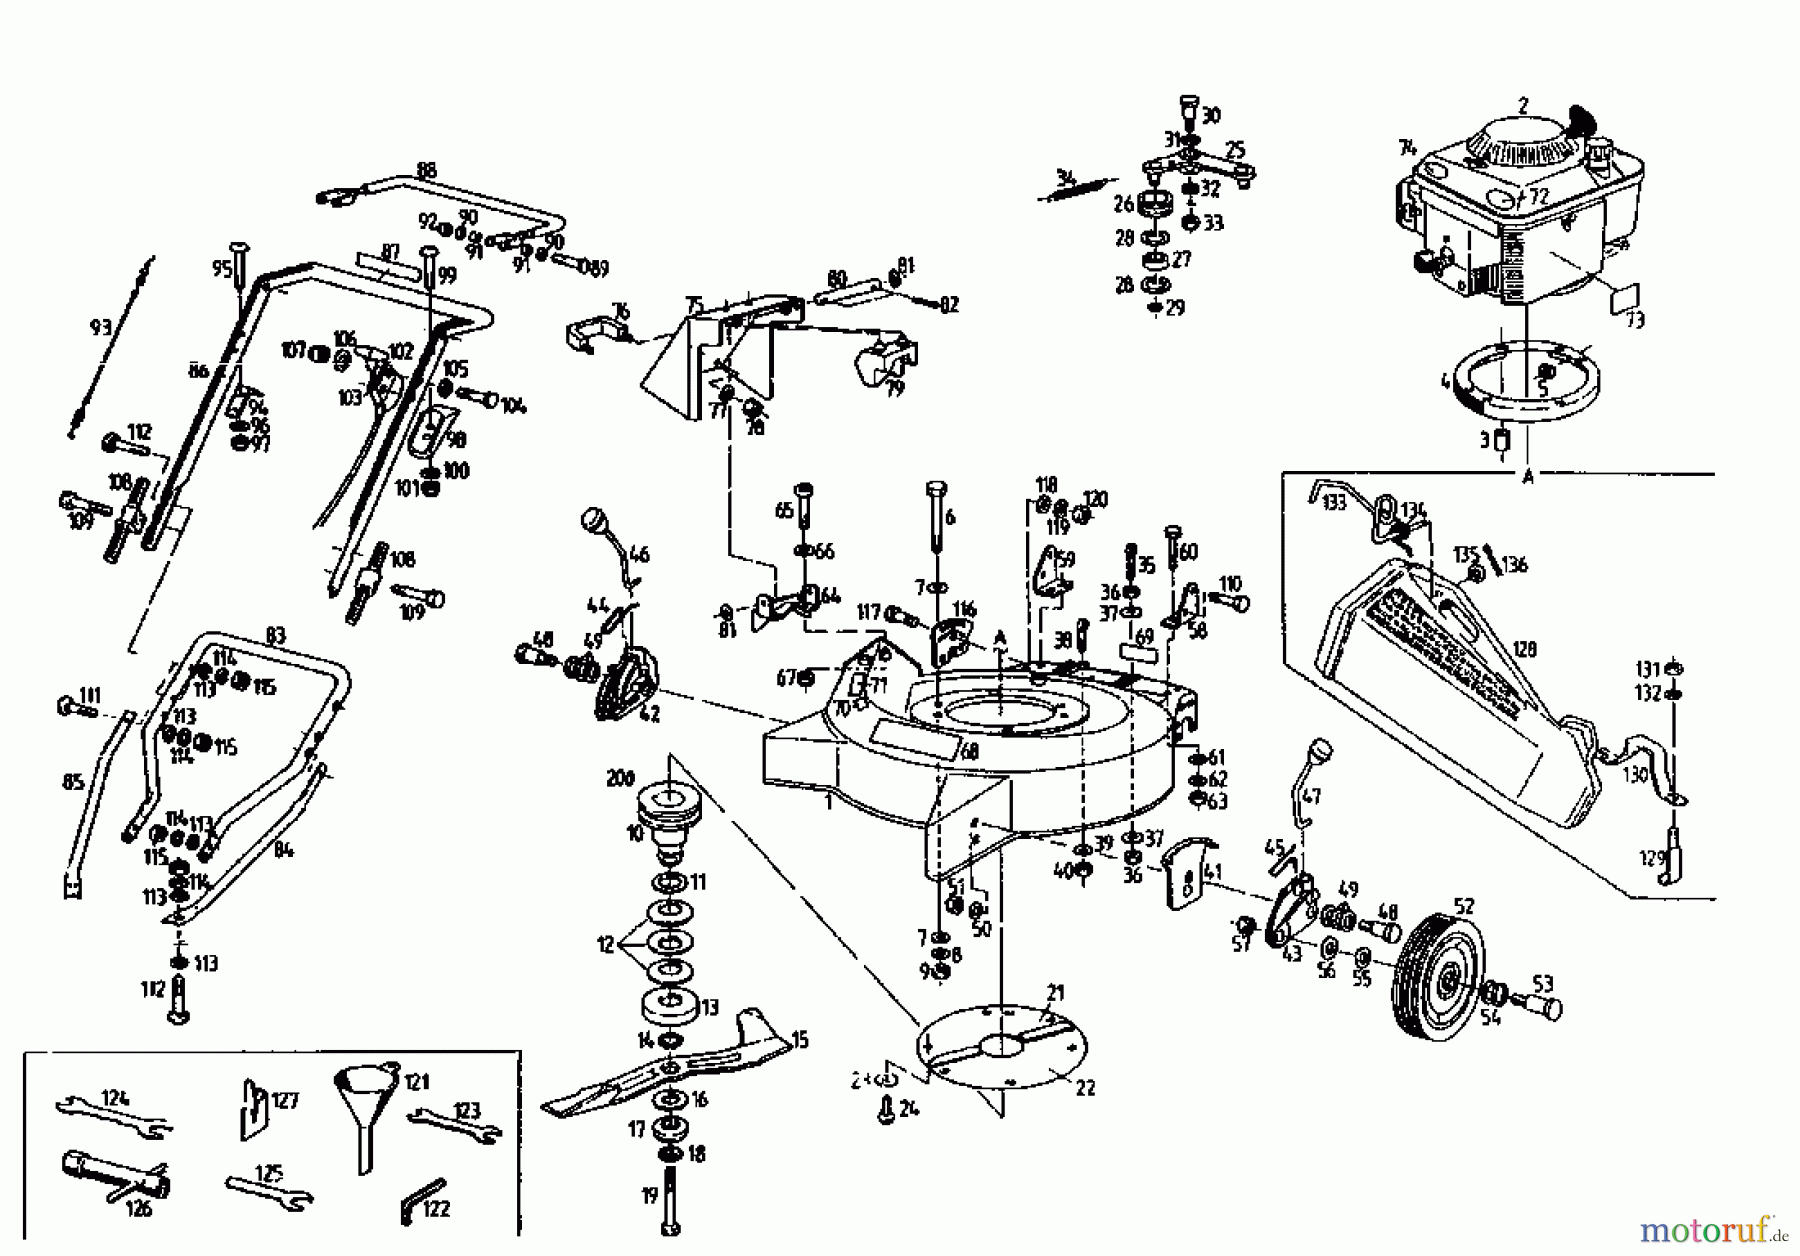  Gutbrod Motormäher mit Antrieb MS 482 PR 04016.03  (1993) Grundgerät